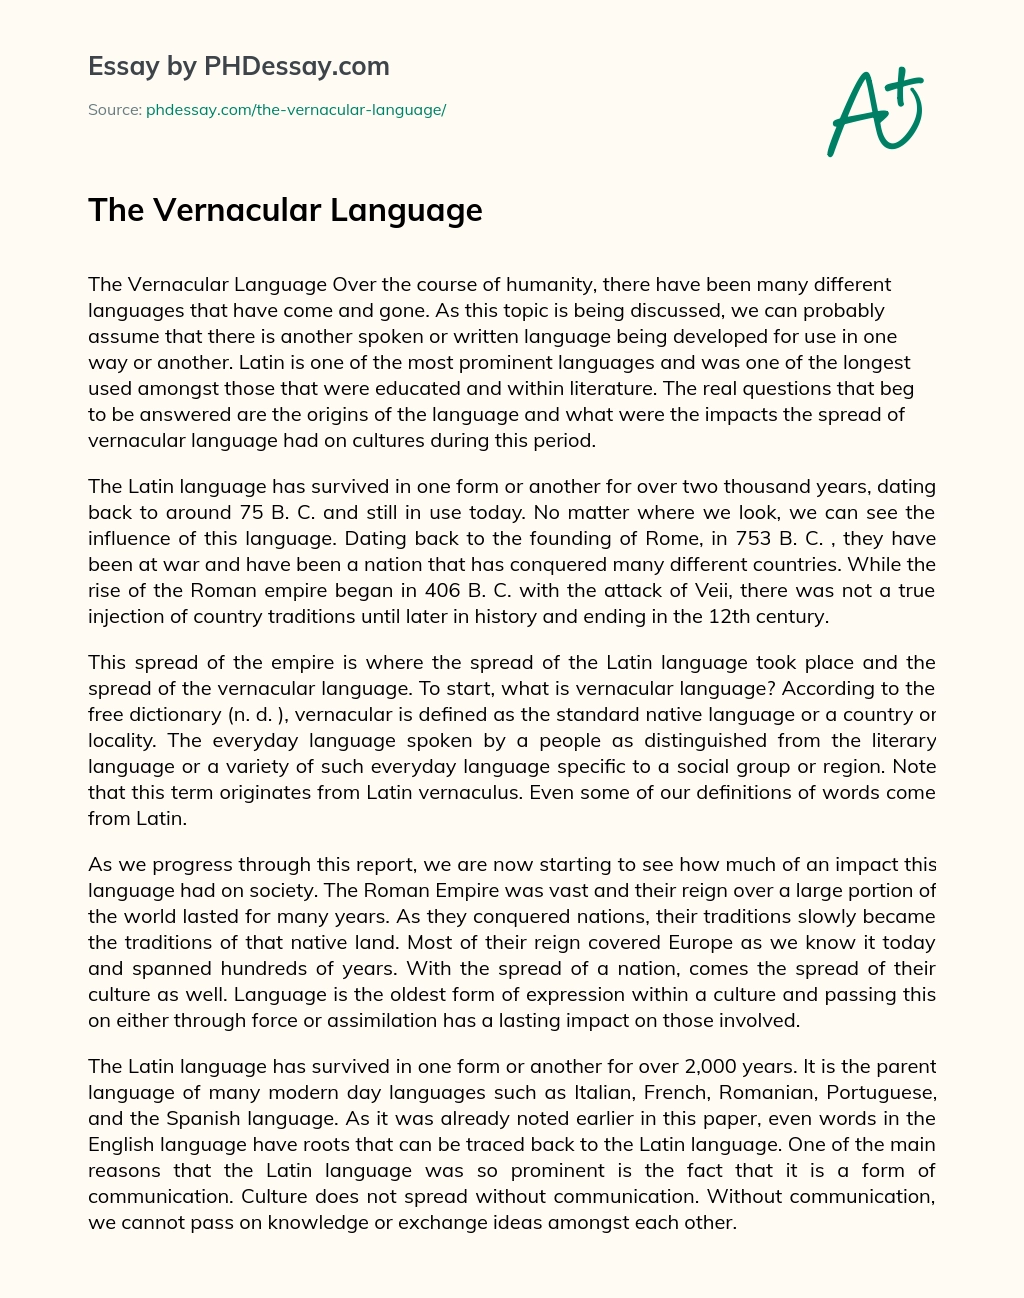 The Vernacular Language essay